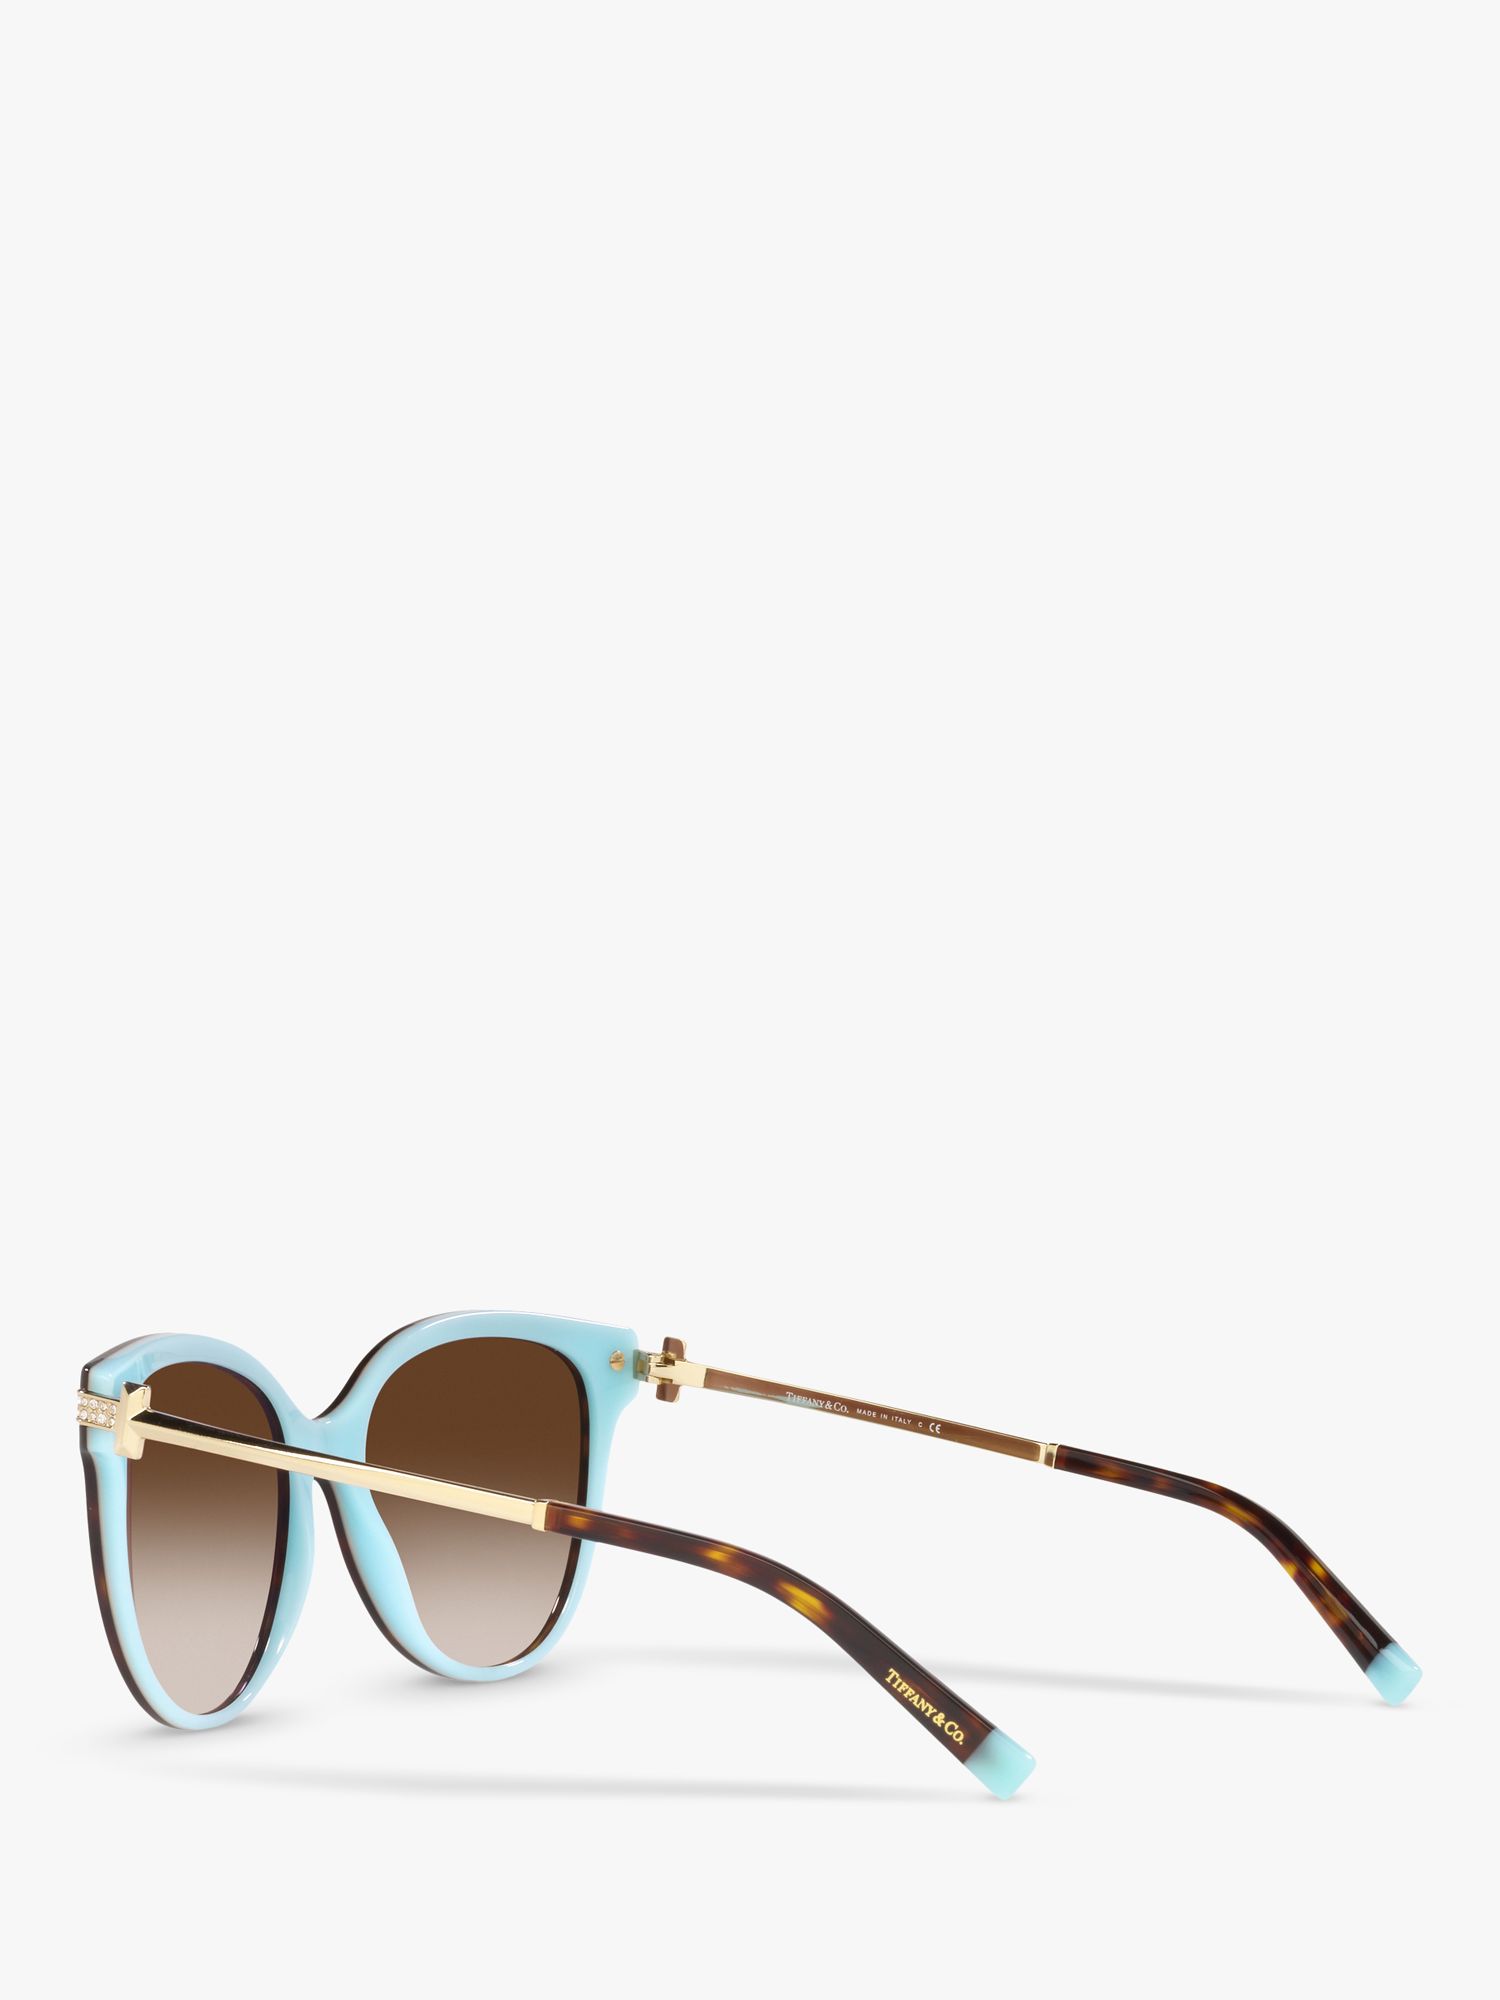 Tiffany & Co TF4193B Women's Oval Sunglasses, Havana/Brown Gradient